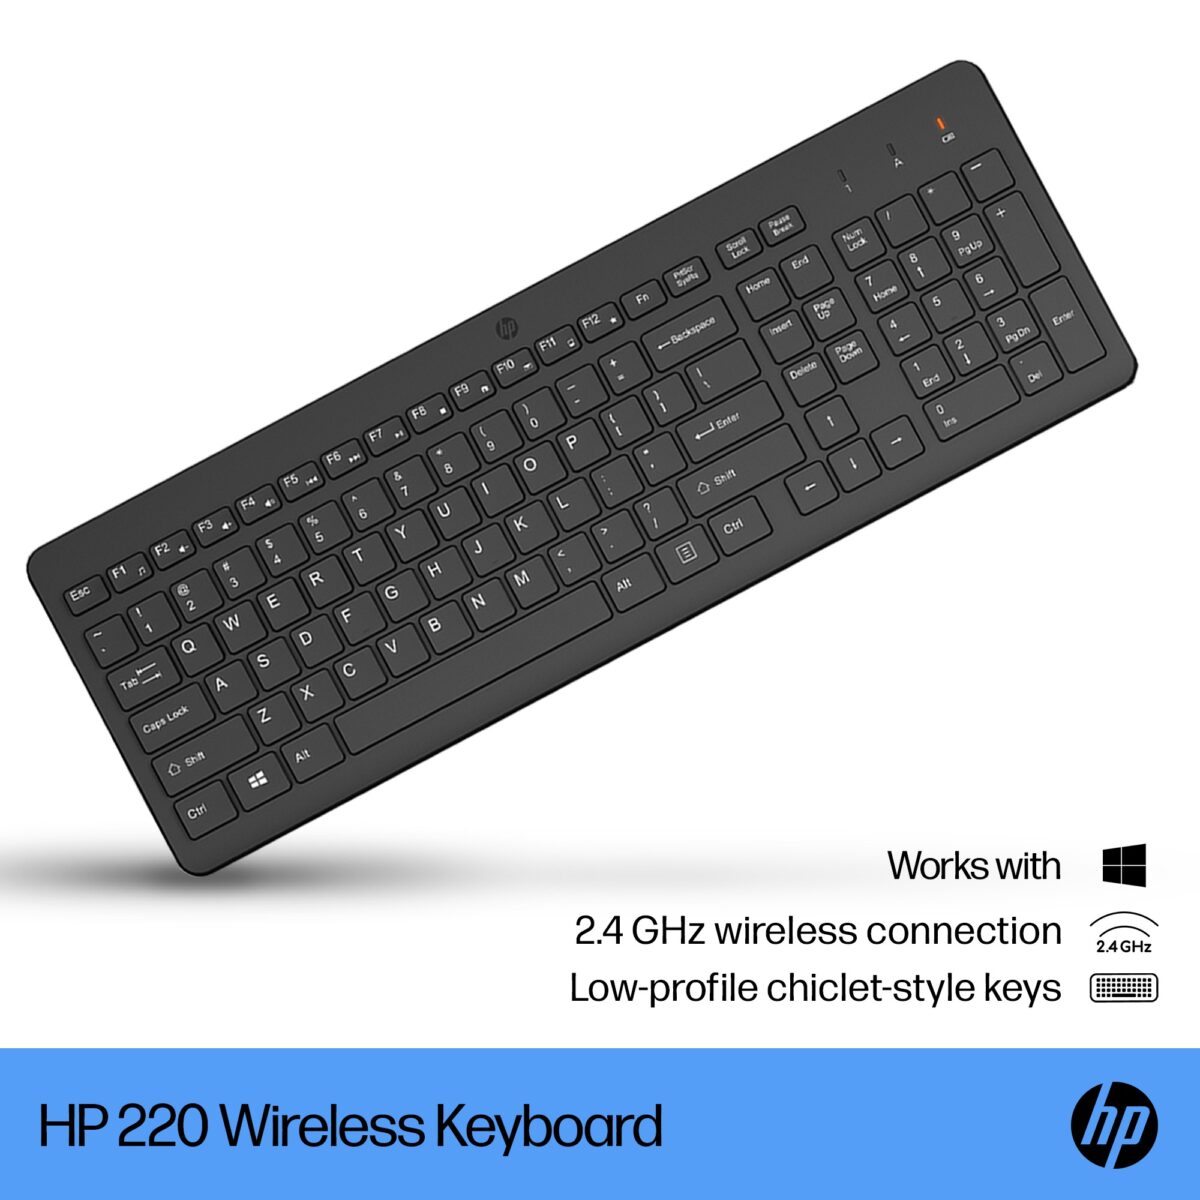 HP 220 Wireless Keyboard Havelock 2